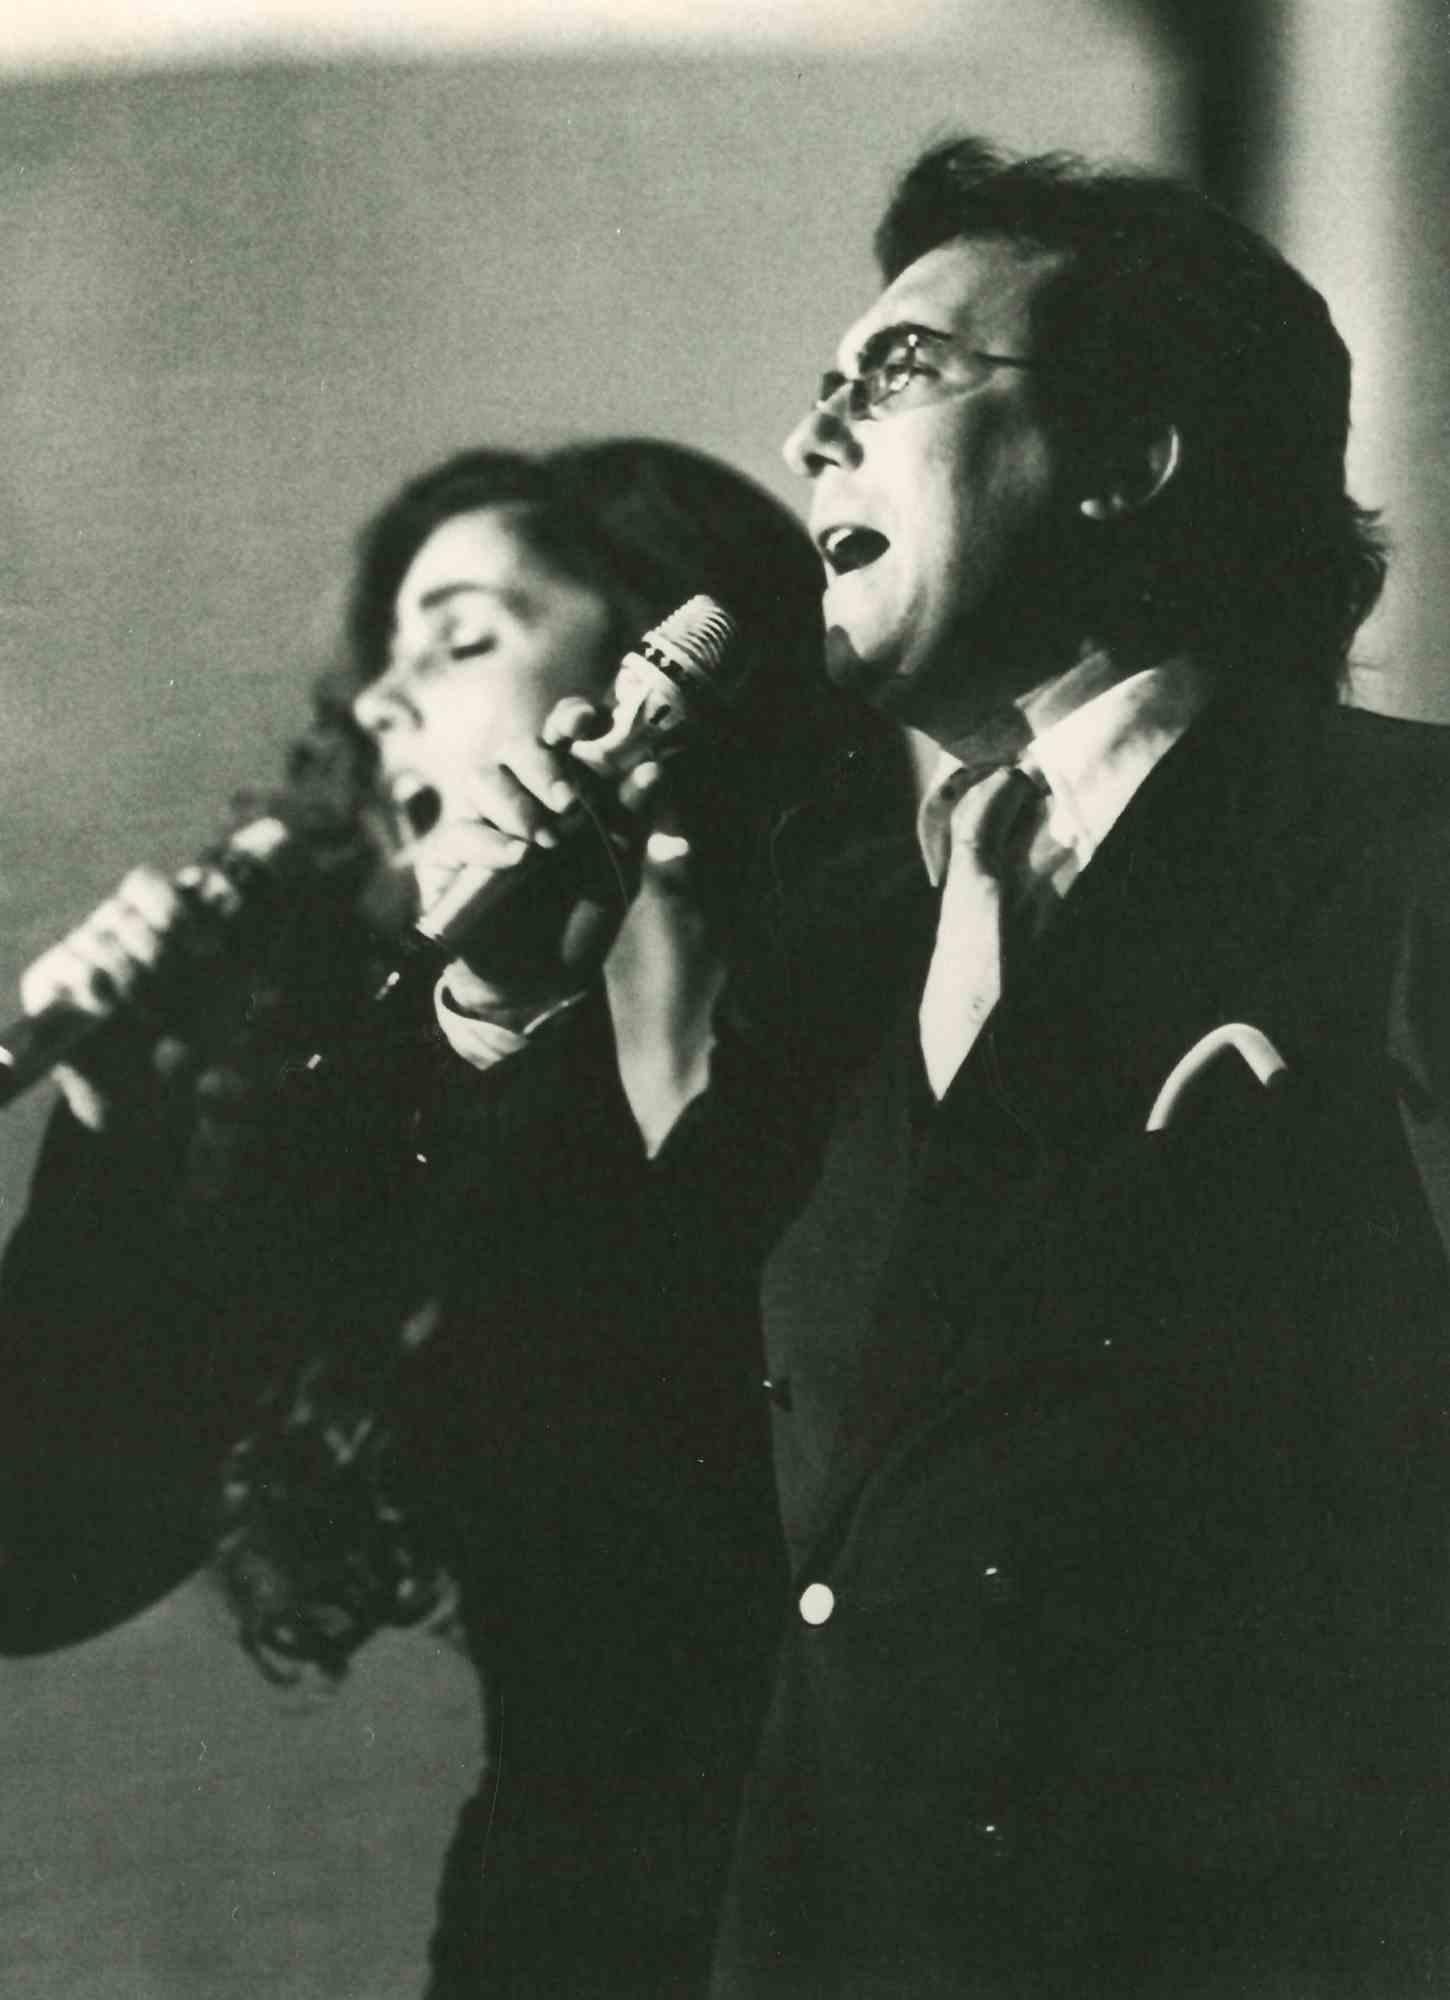 Al Bano et Romina Power - Photographie - 1980